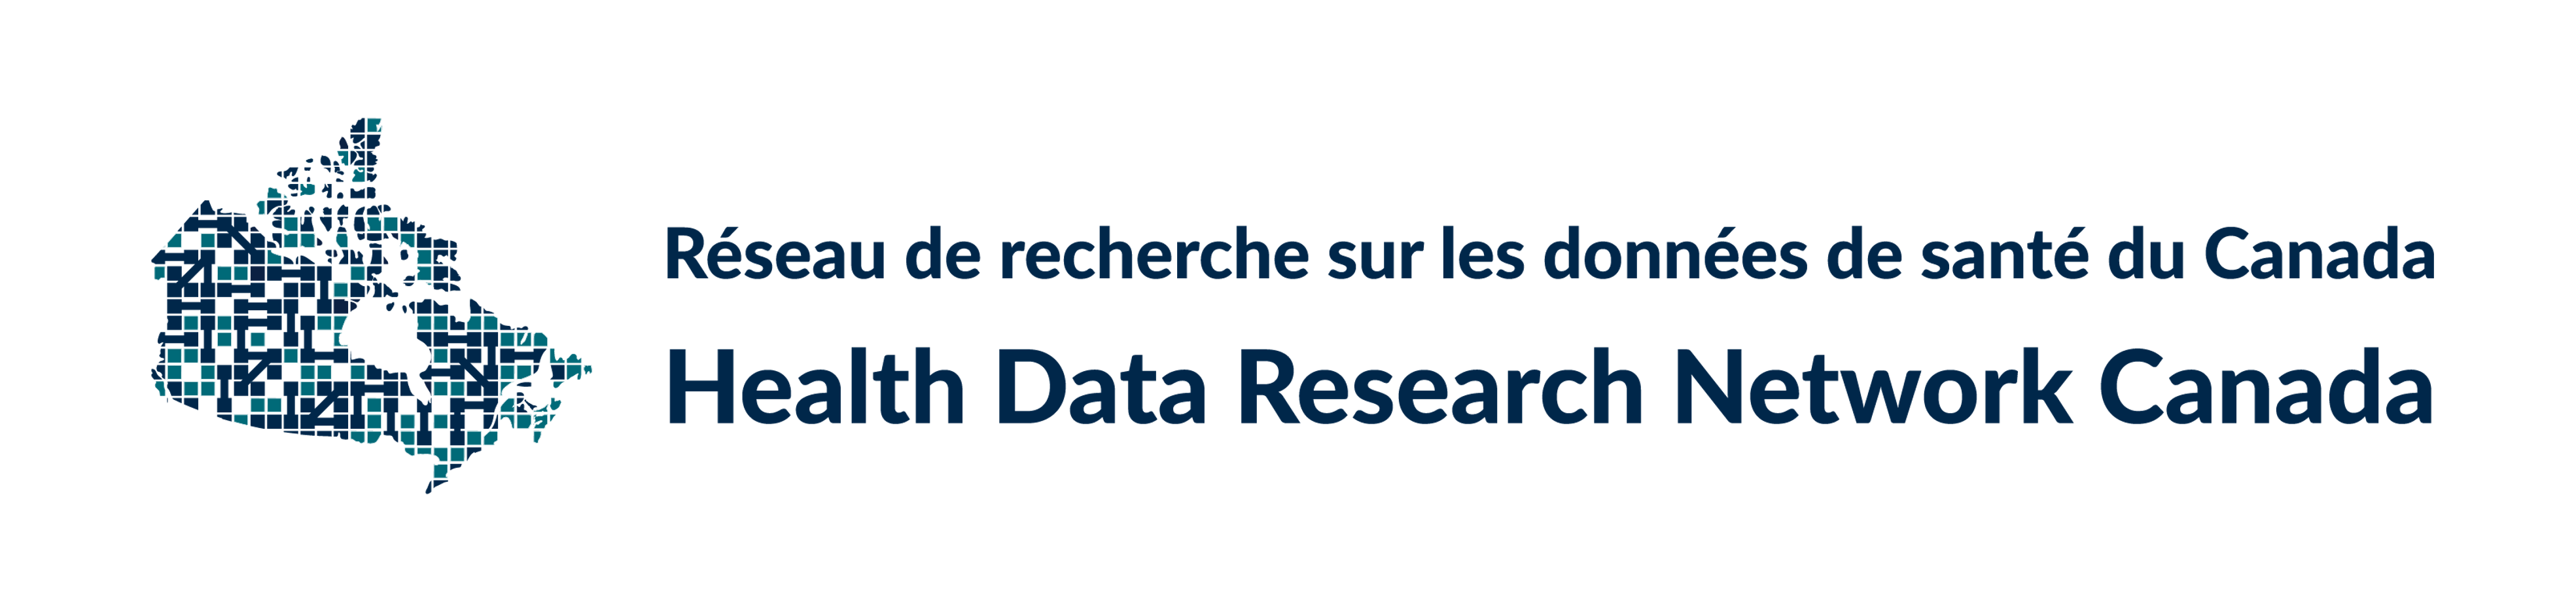 Health Data Research Network (HDRN) Logo